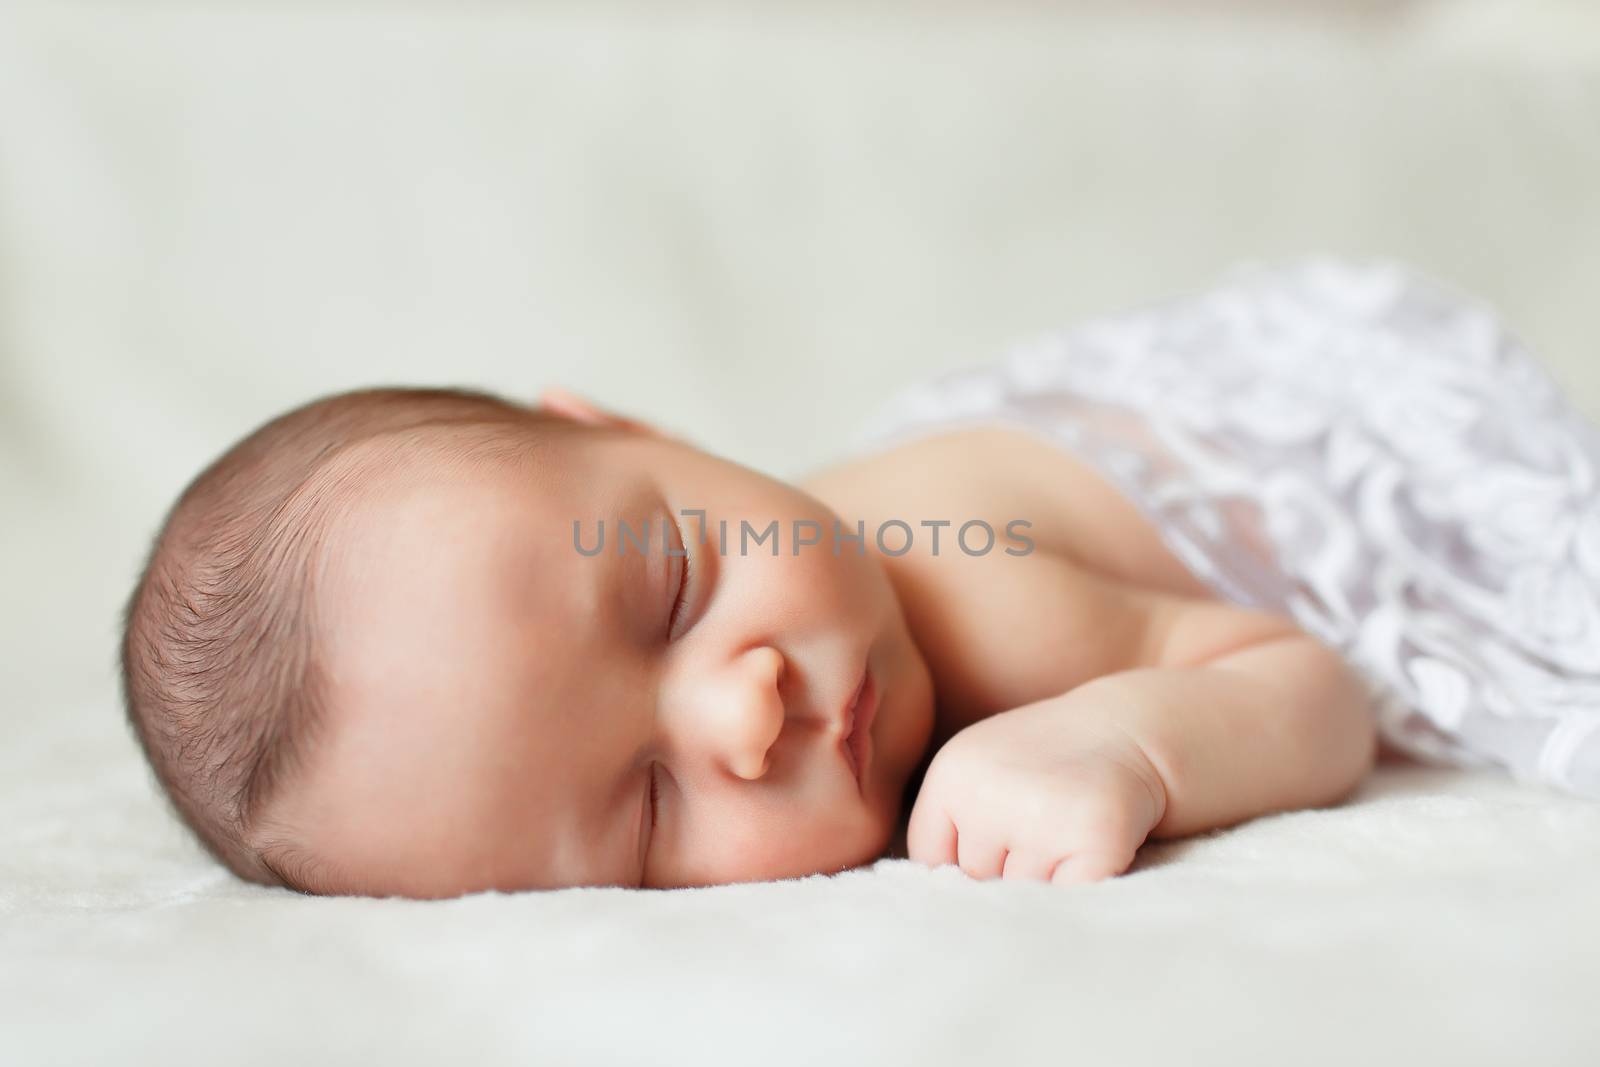 a beautiful sweet newborn baby sleeping on a blanket